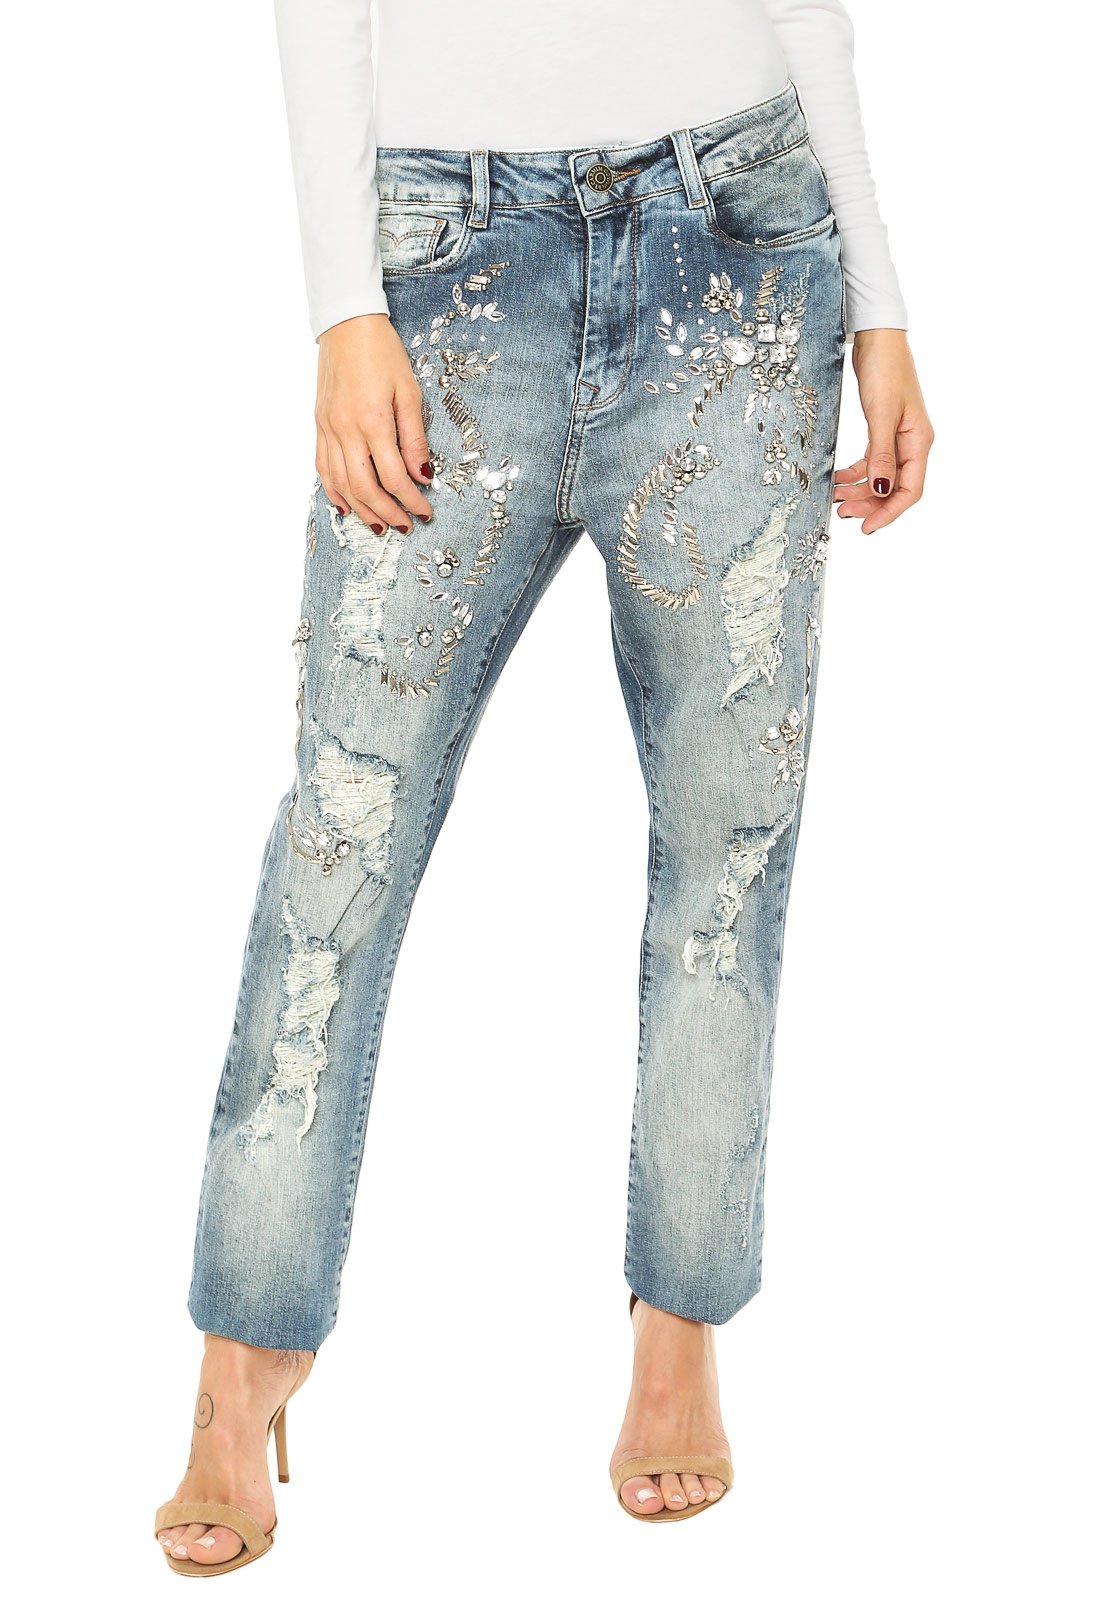 jeans carmim feminino